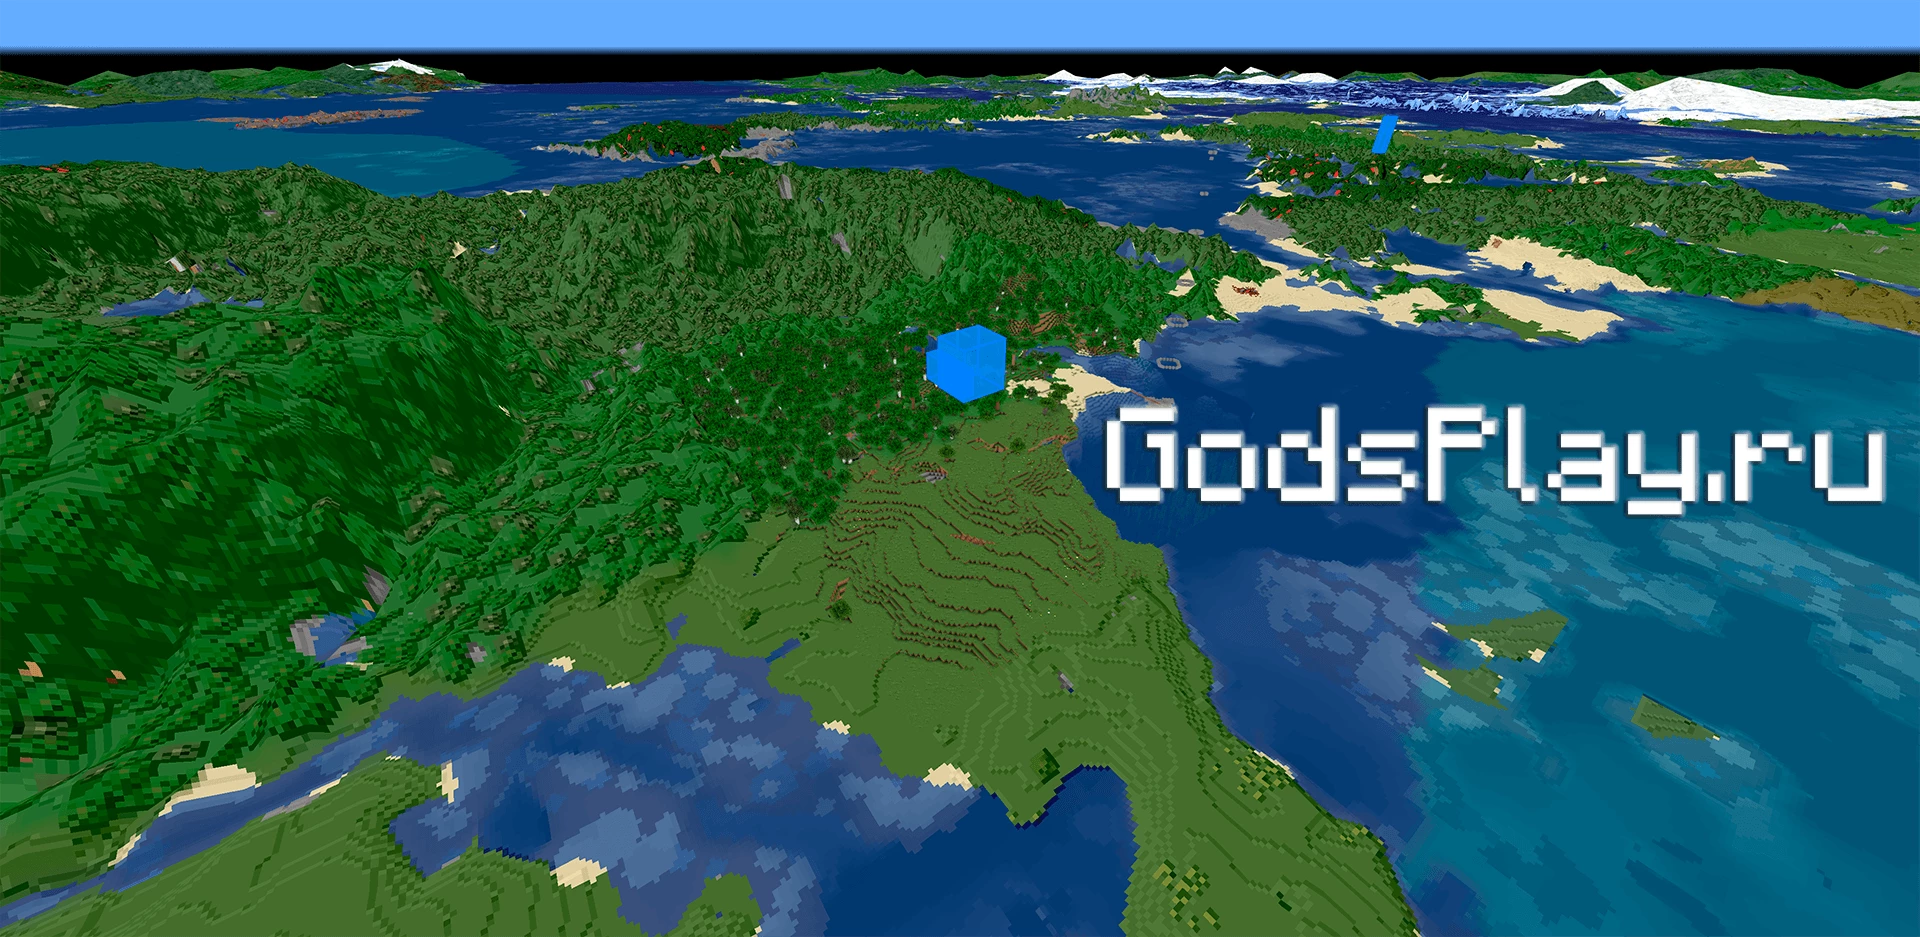 Скриншот сервера GodsPlay